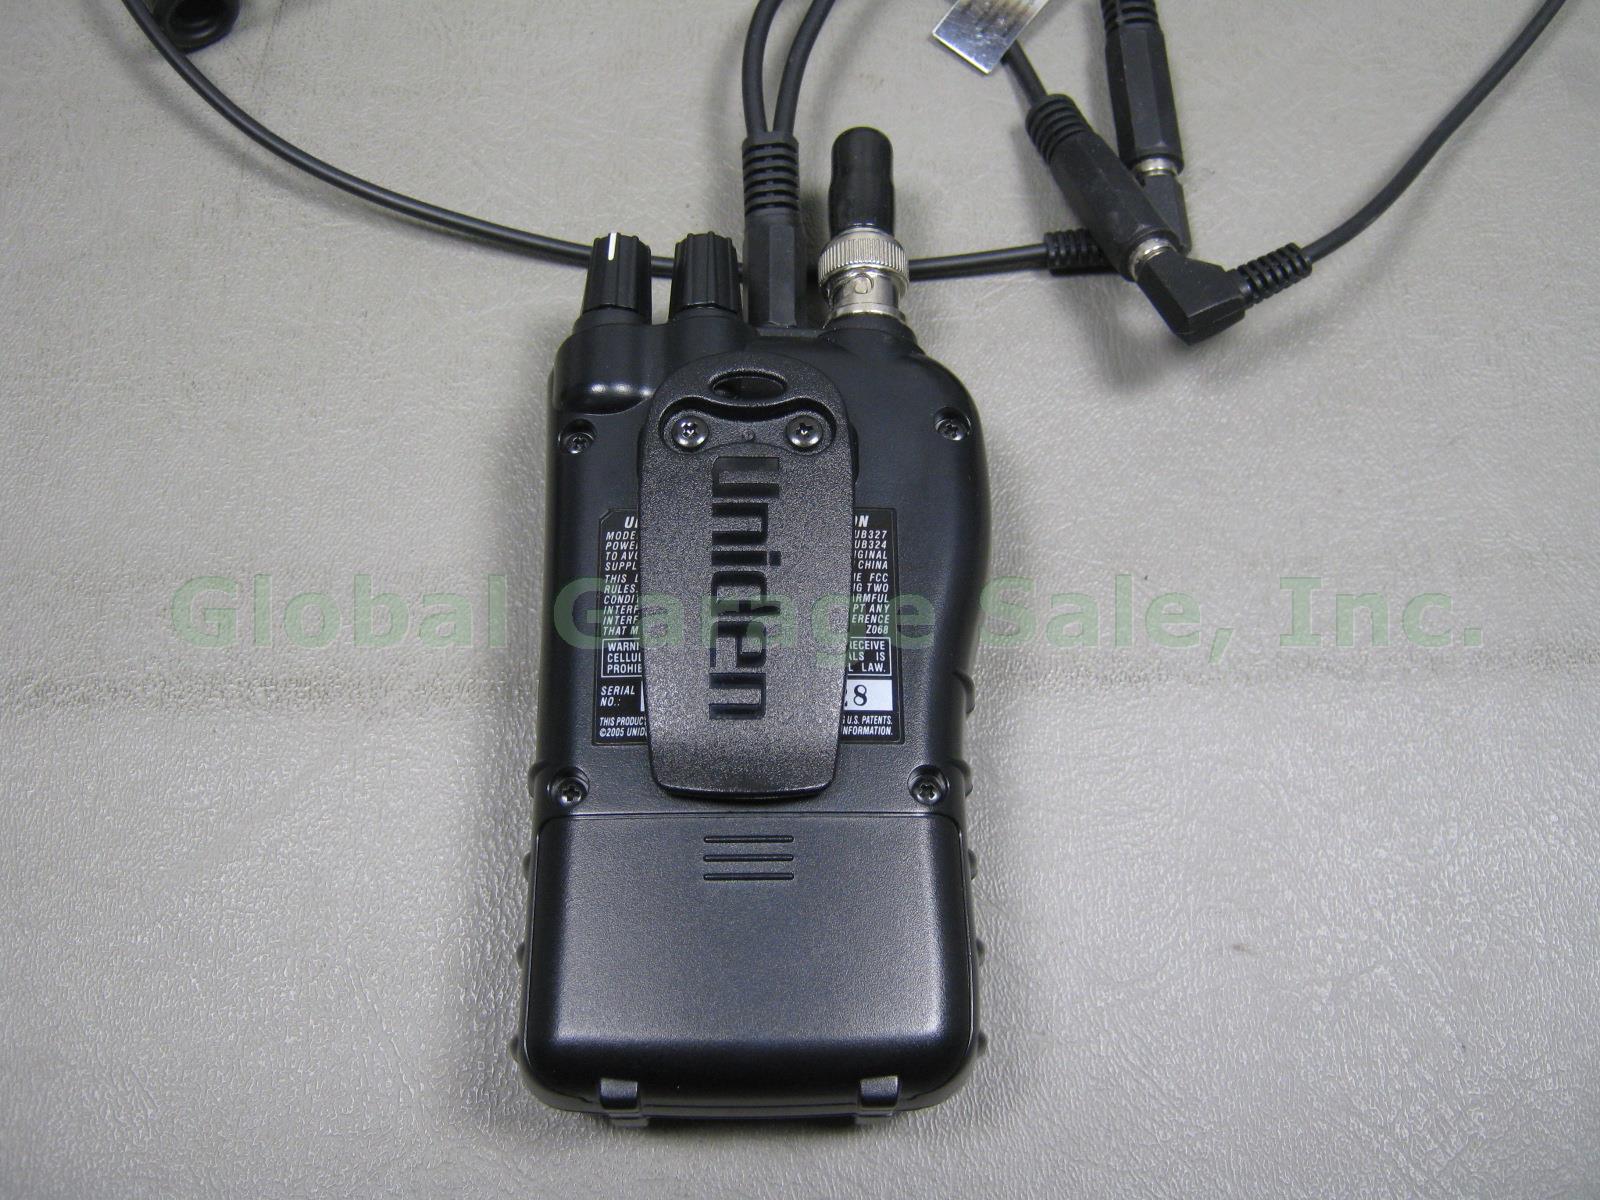 Uniden BC92XLT Handheld Scanner Radio + 2 NASCAR Racing TP60 Headphones Headsets 4